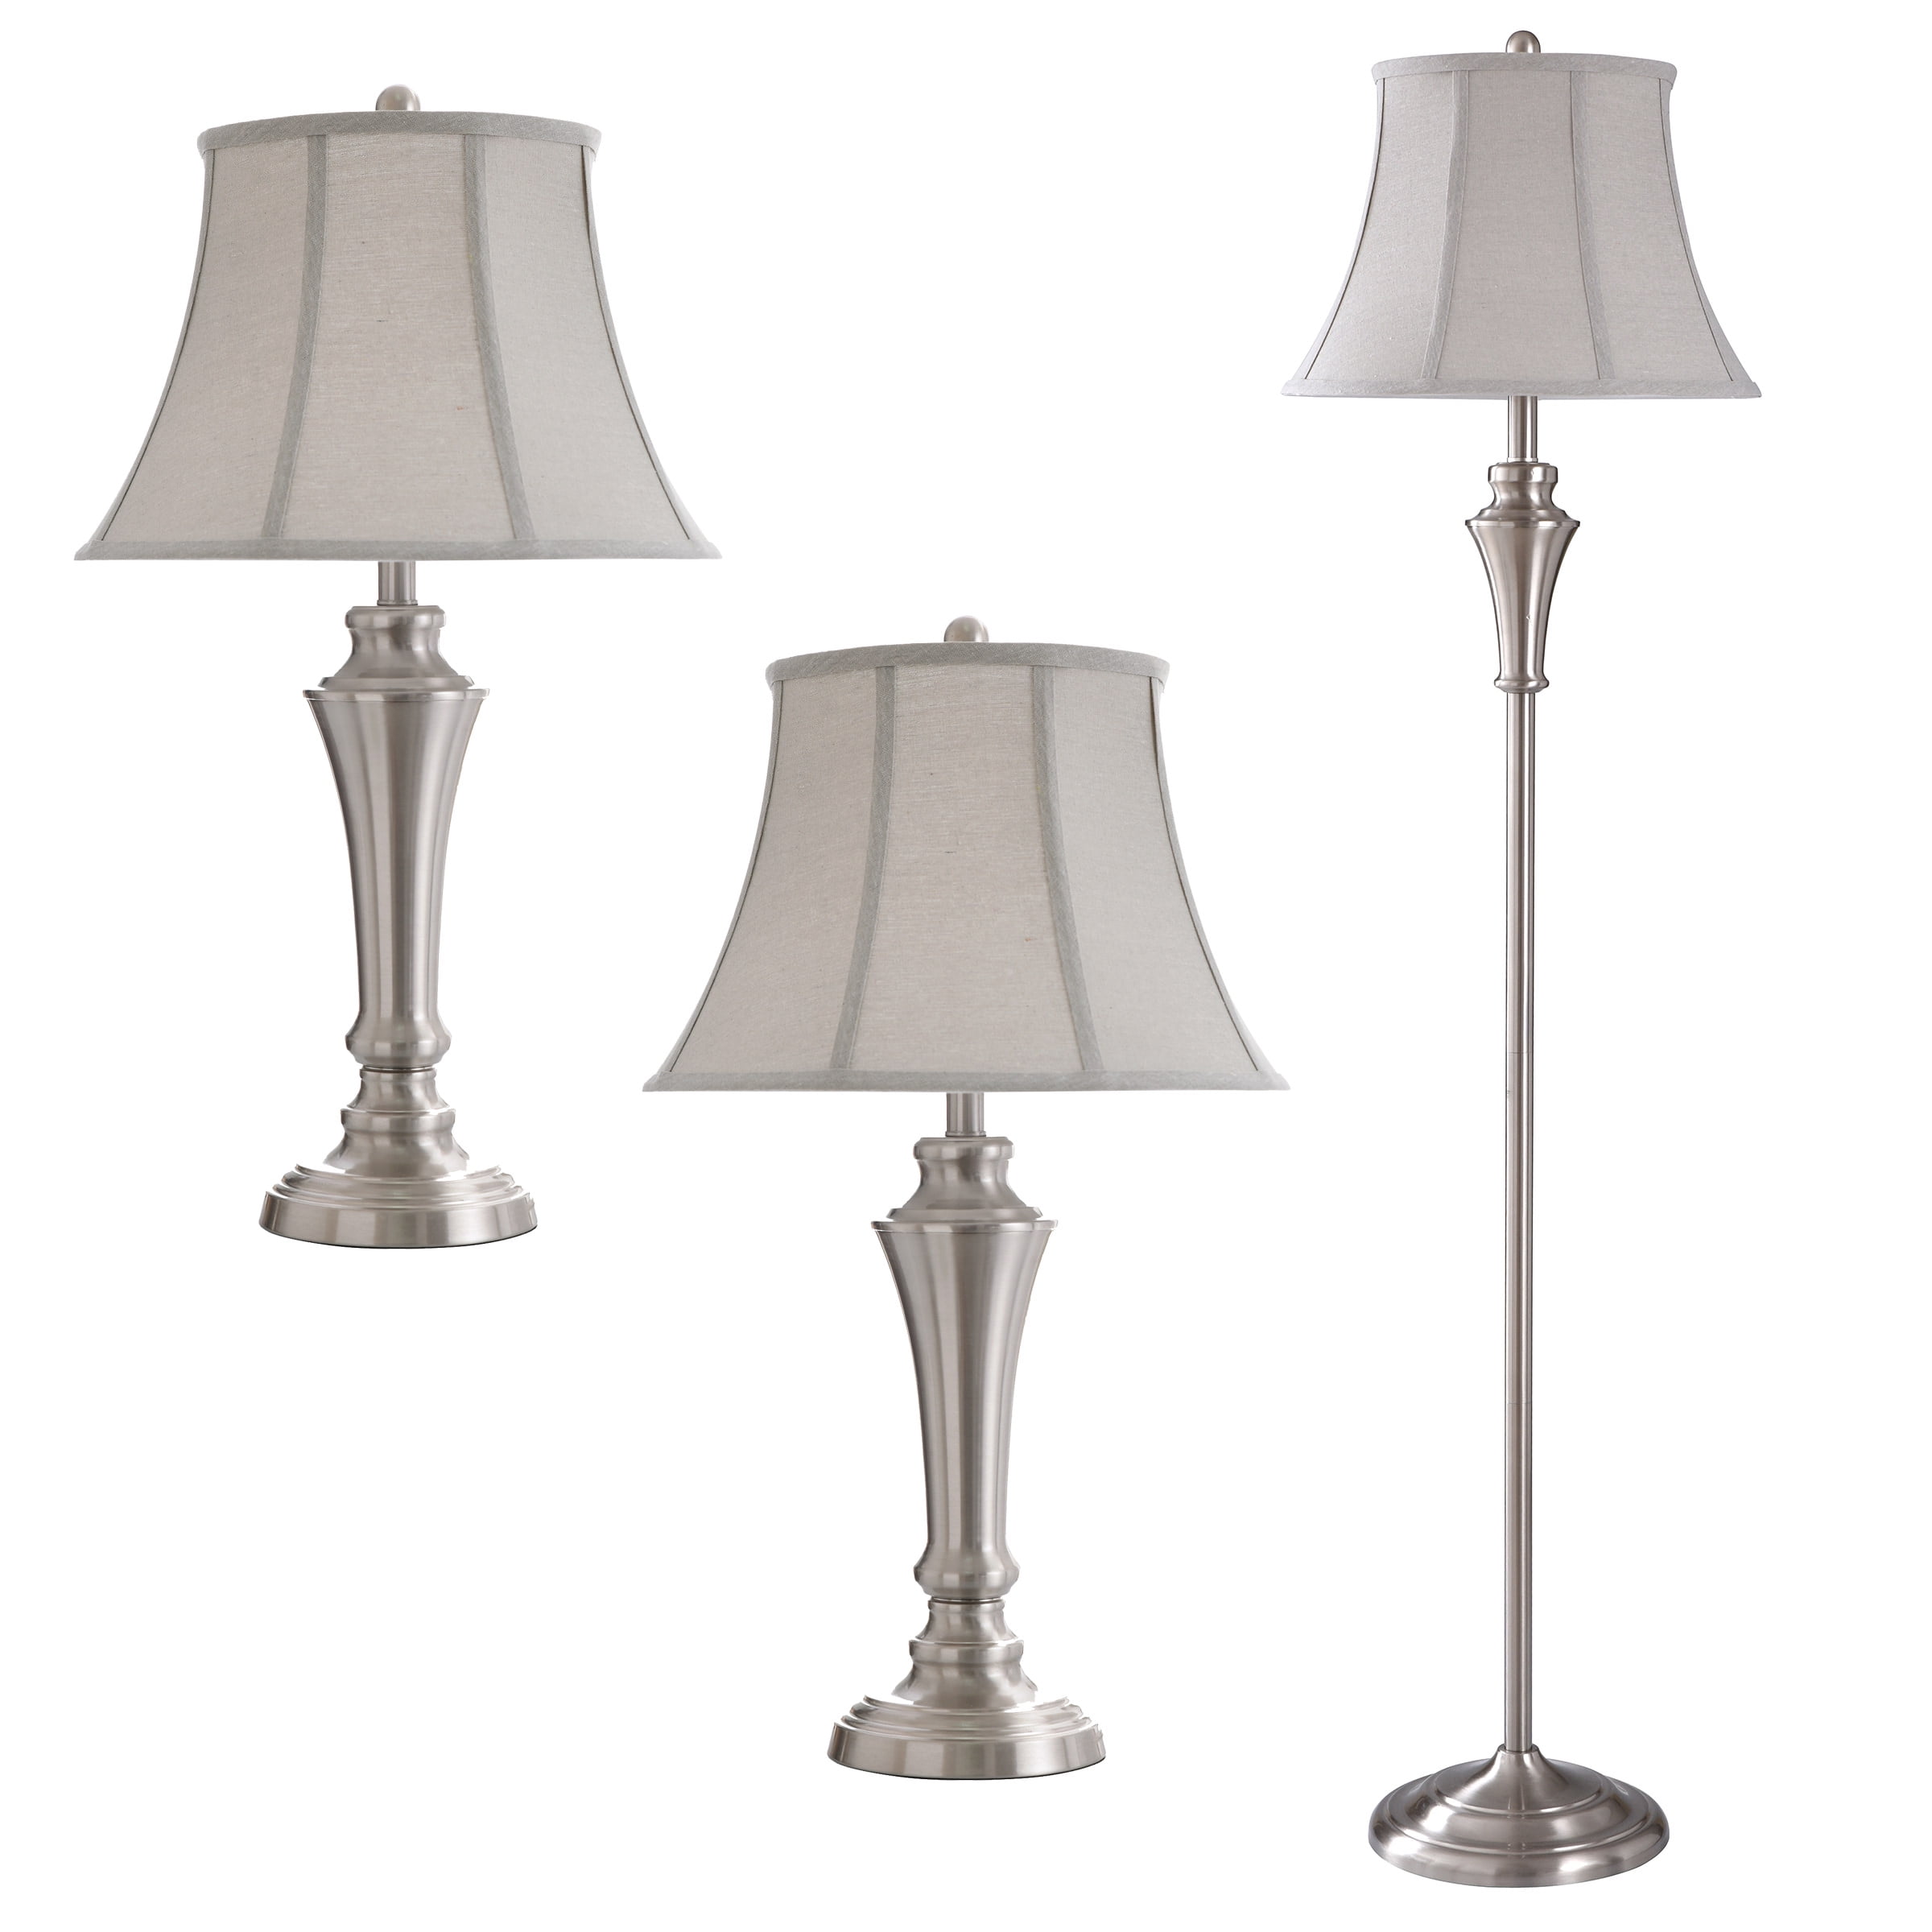 Floor Lamp/Table Lamp Set - 3-Piece Set (2 Table, 1 Floor) - Geneva Taupe  Fabric Shade - Brushed Nickel Finish